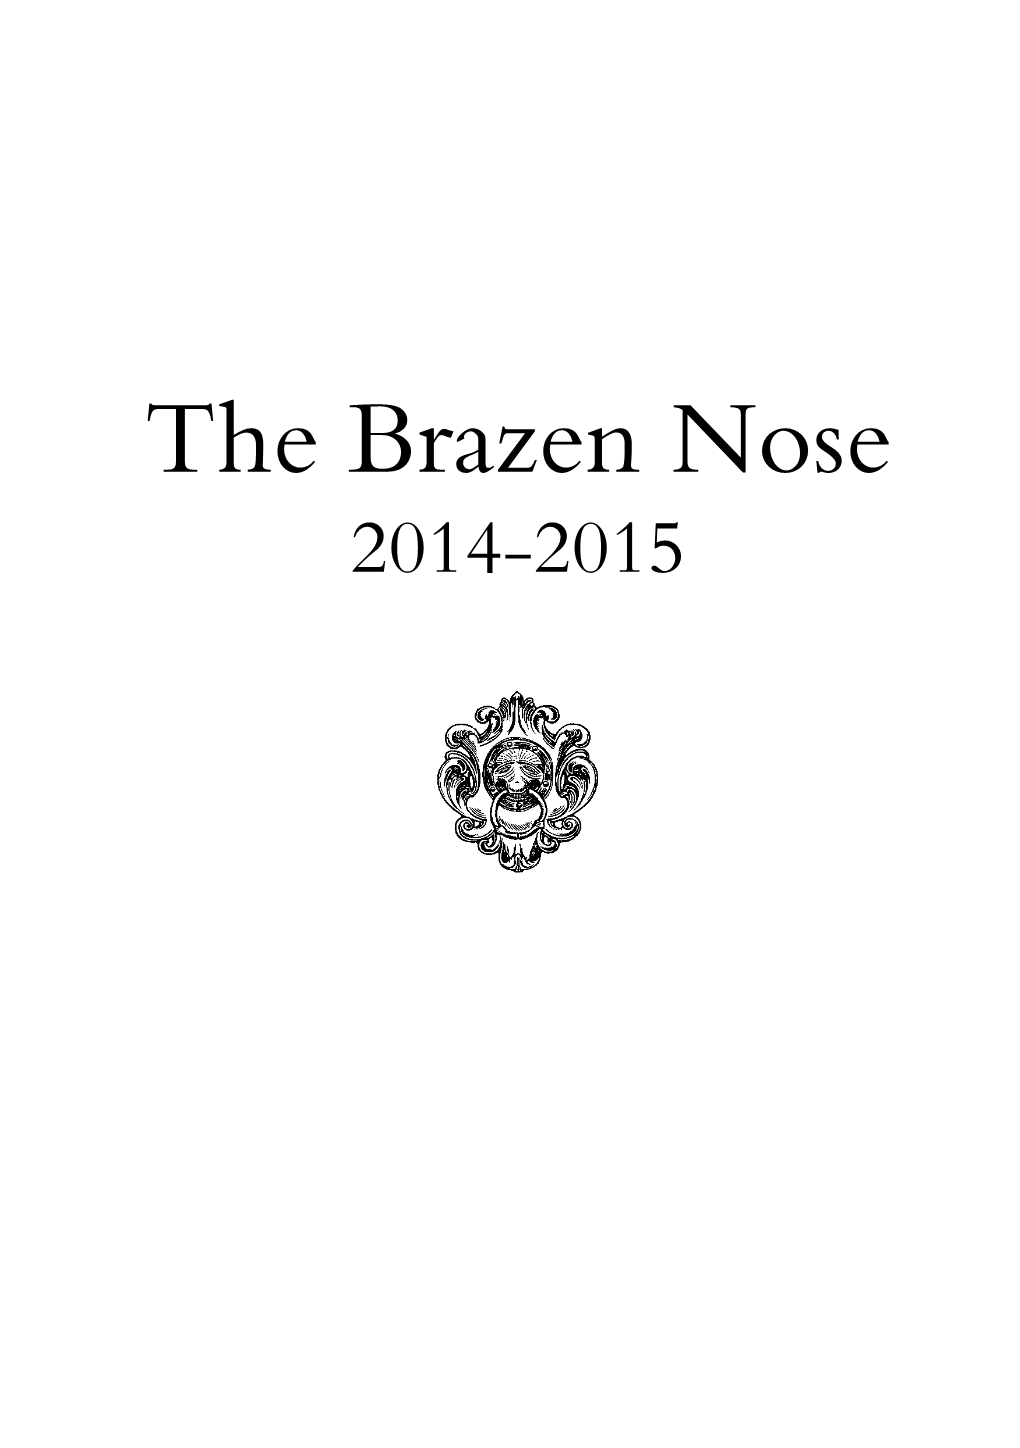 The Brazen Nose 2014-2015